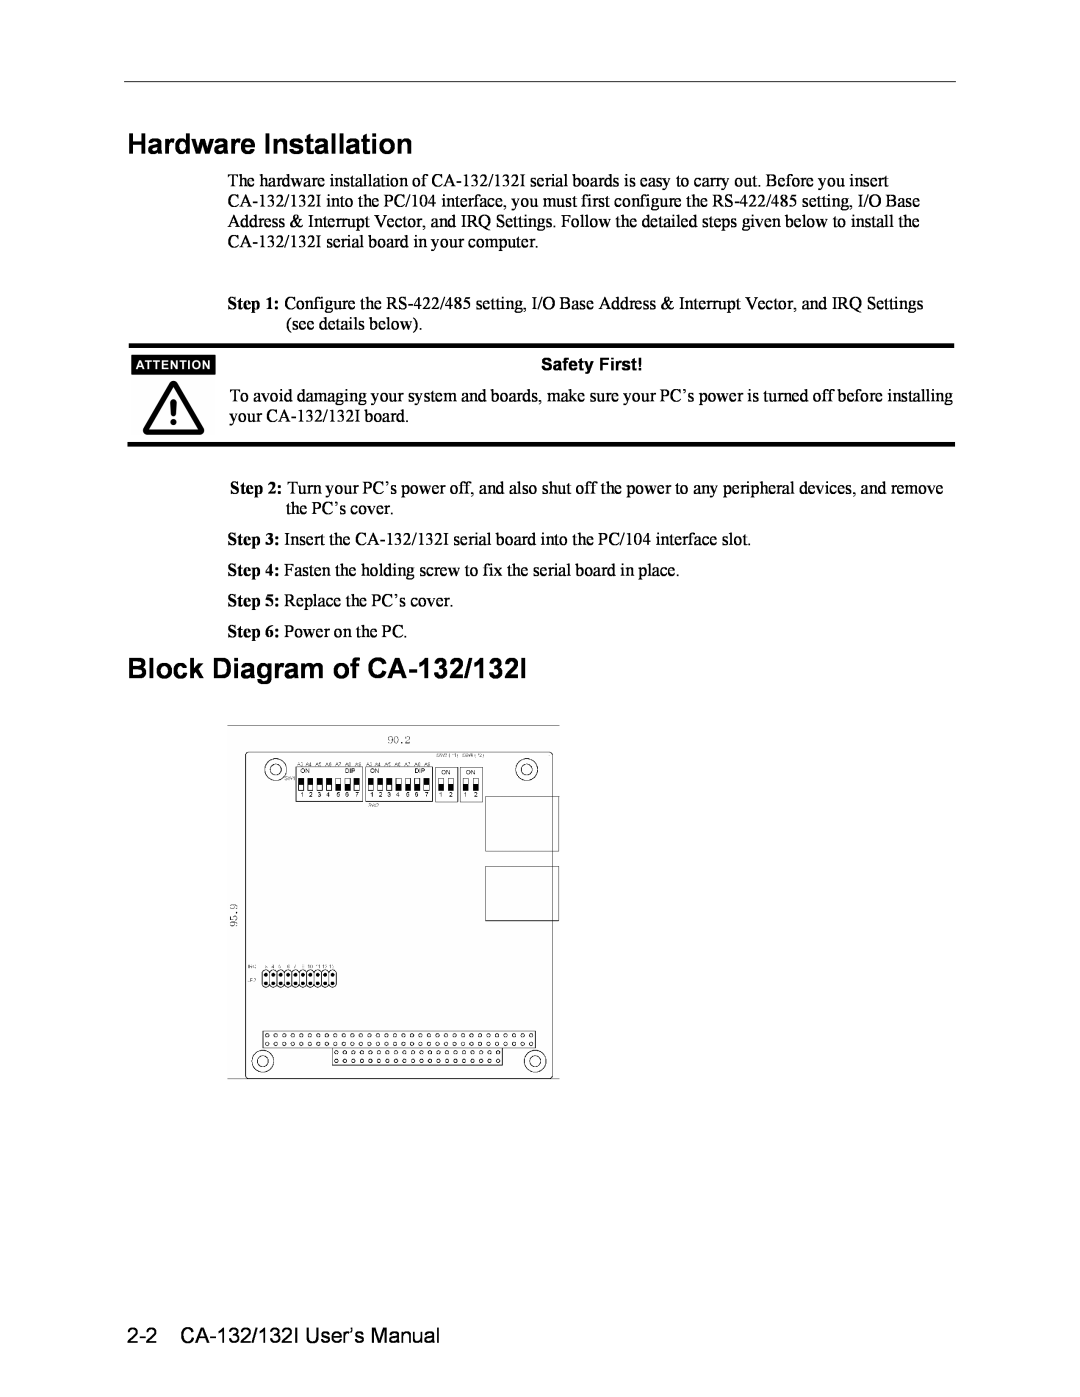 Moxa Technologies Hardware Installation, Block Diagram of CA-132/132I, 2-2 CA-132/132I User’s Manual, Safety First 